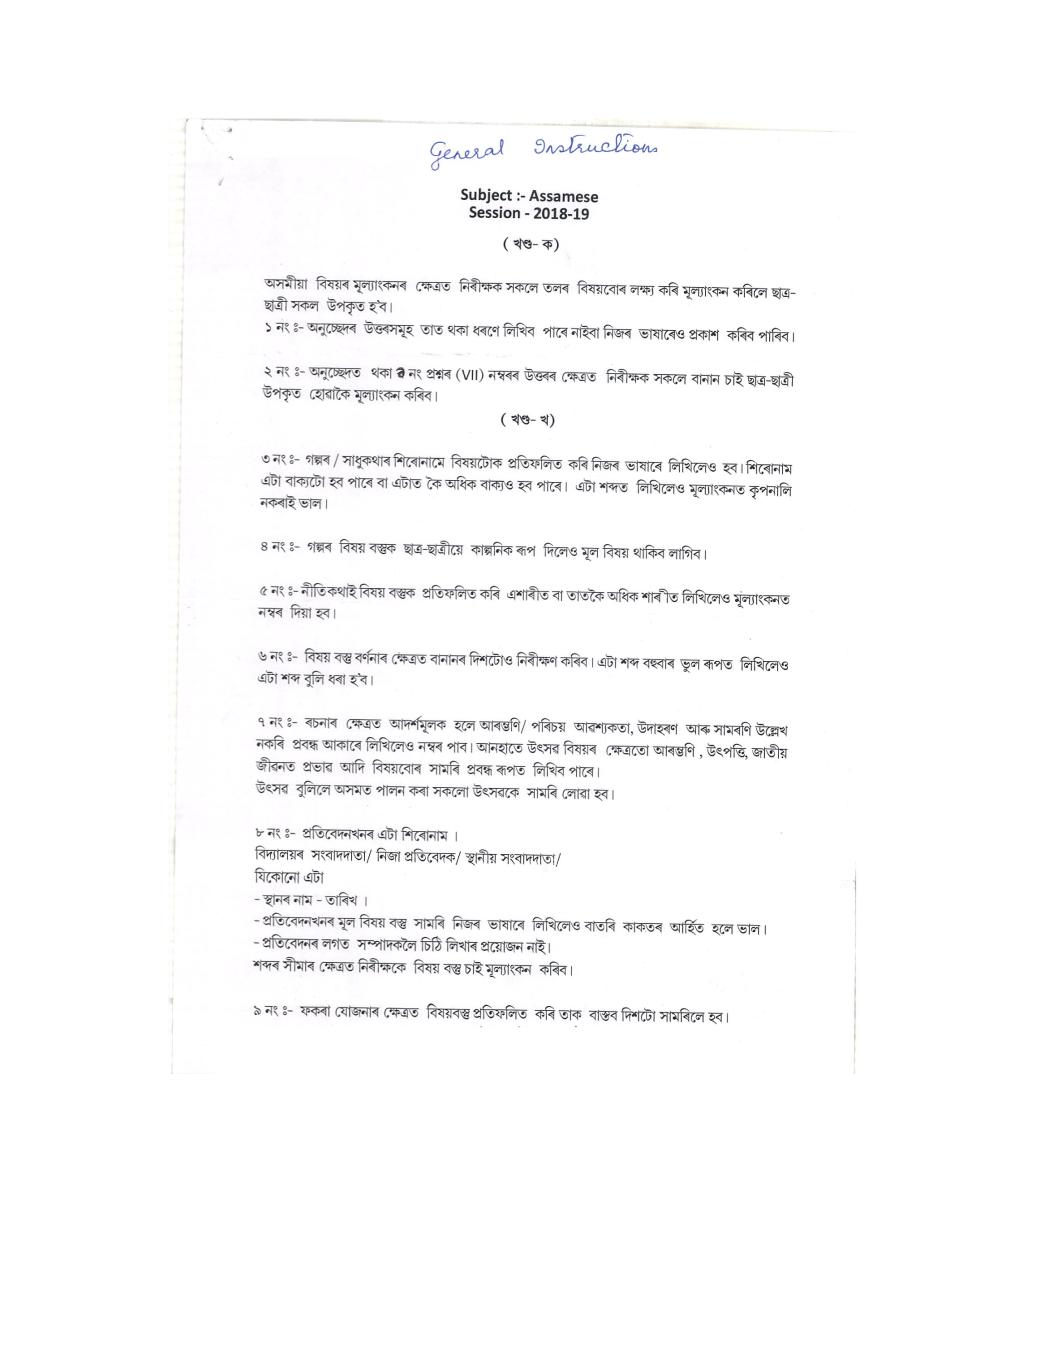 CBSE Class 10 Assamese Question Paper 2019 Solutions - Page 1